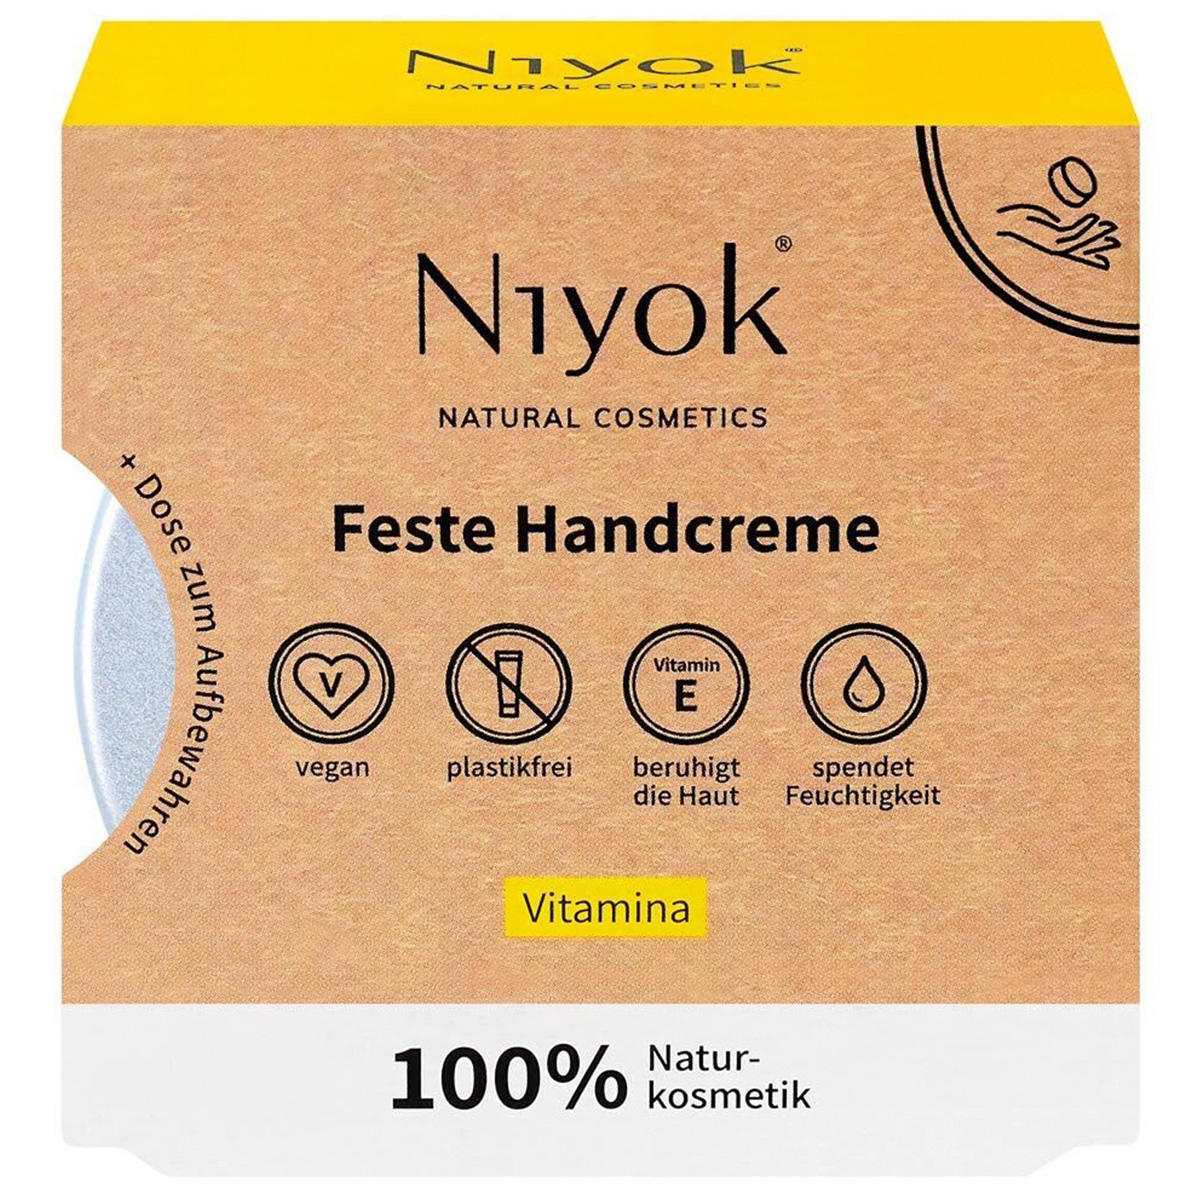 Niyok Vitamina vaste handcrème 50 g - 1